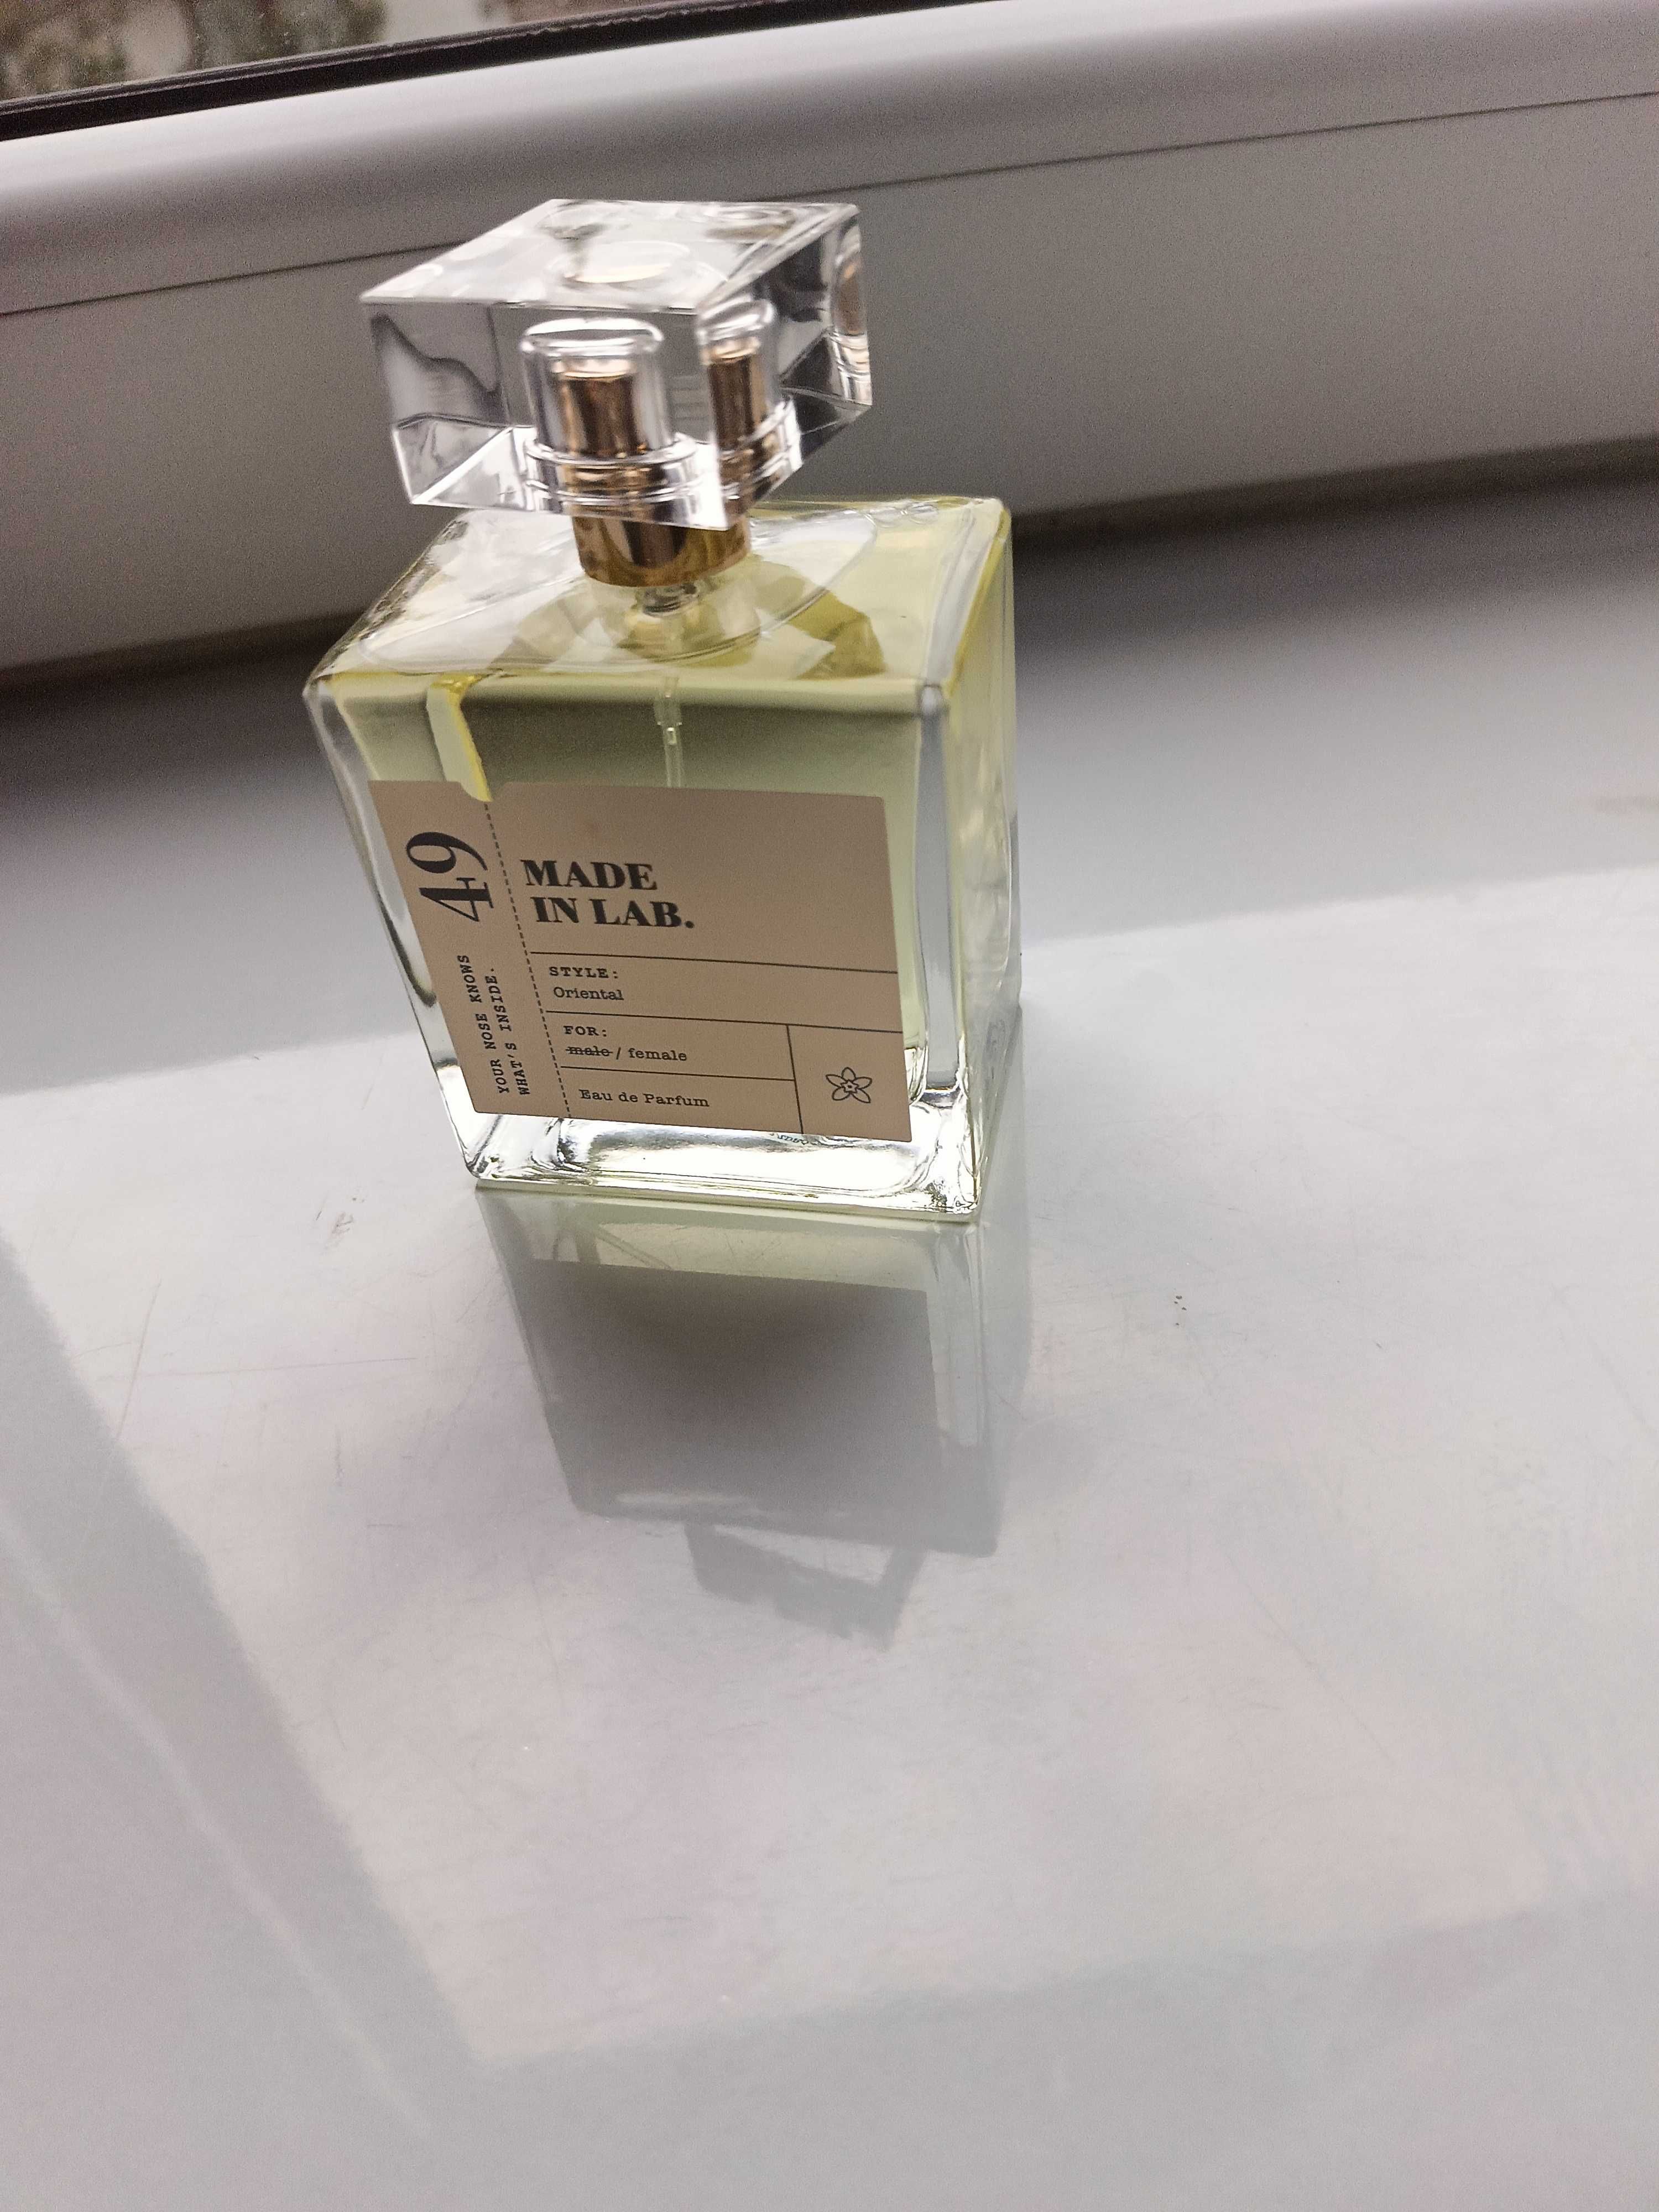 Perfum made in lab 49